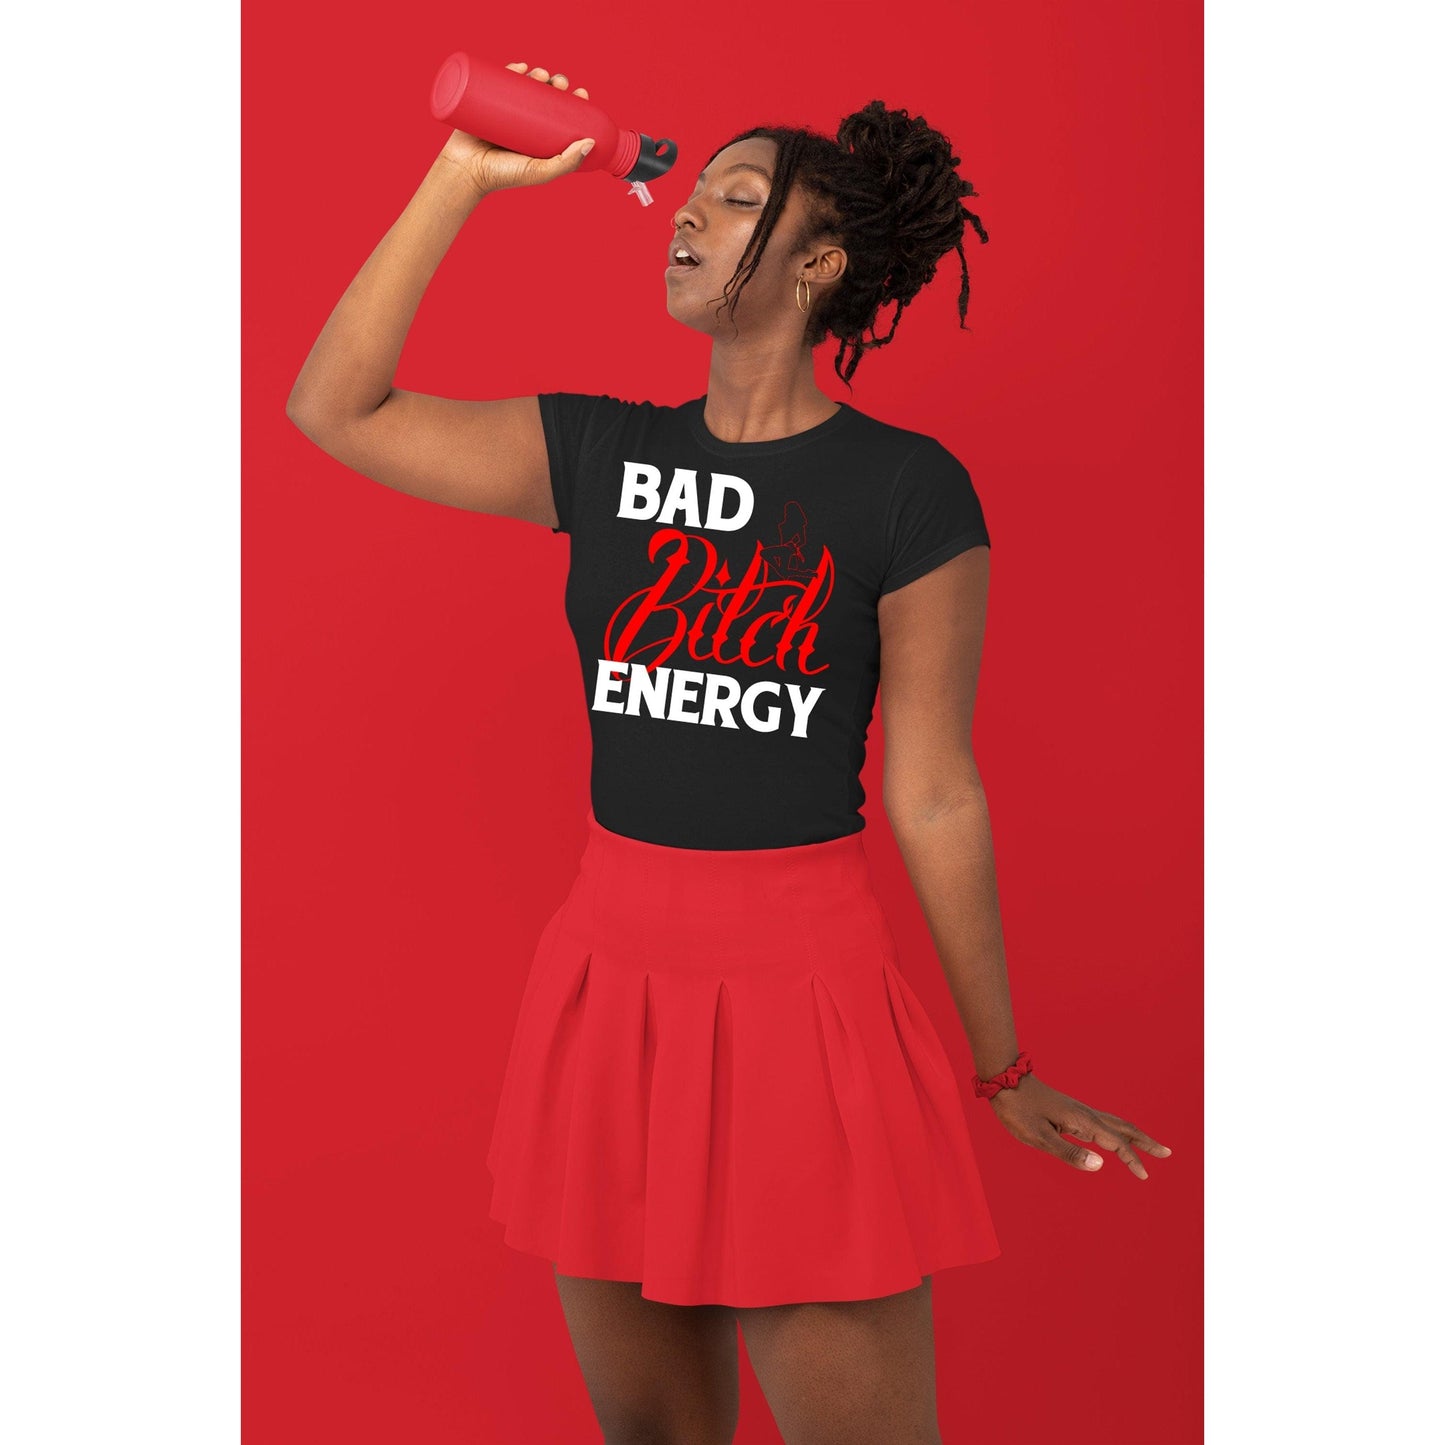 Bad Bitch Energy - Wilson Design Group